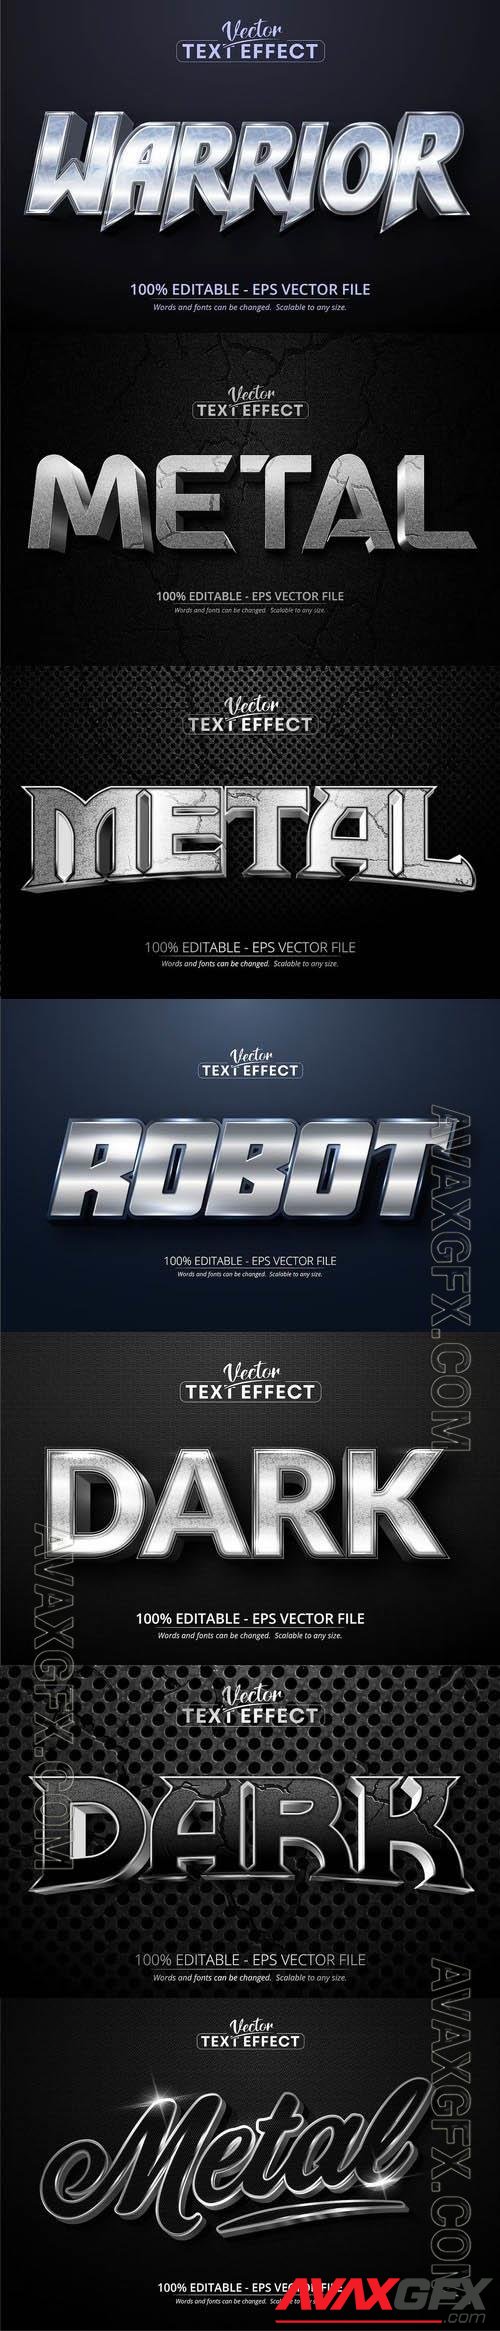 Vector 3d text editable, text effect font vol 121 [EPS]